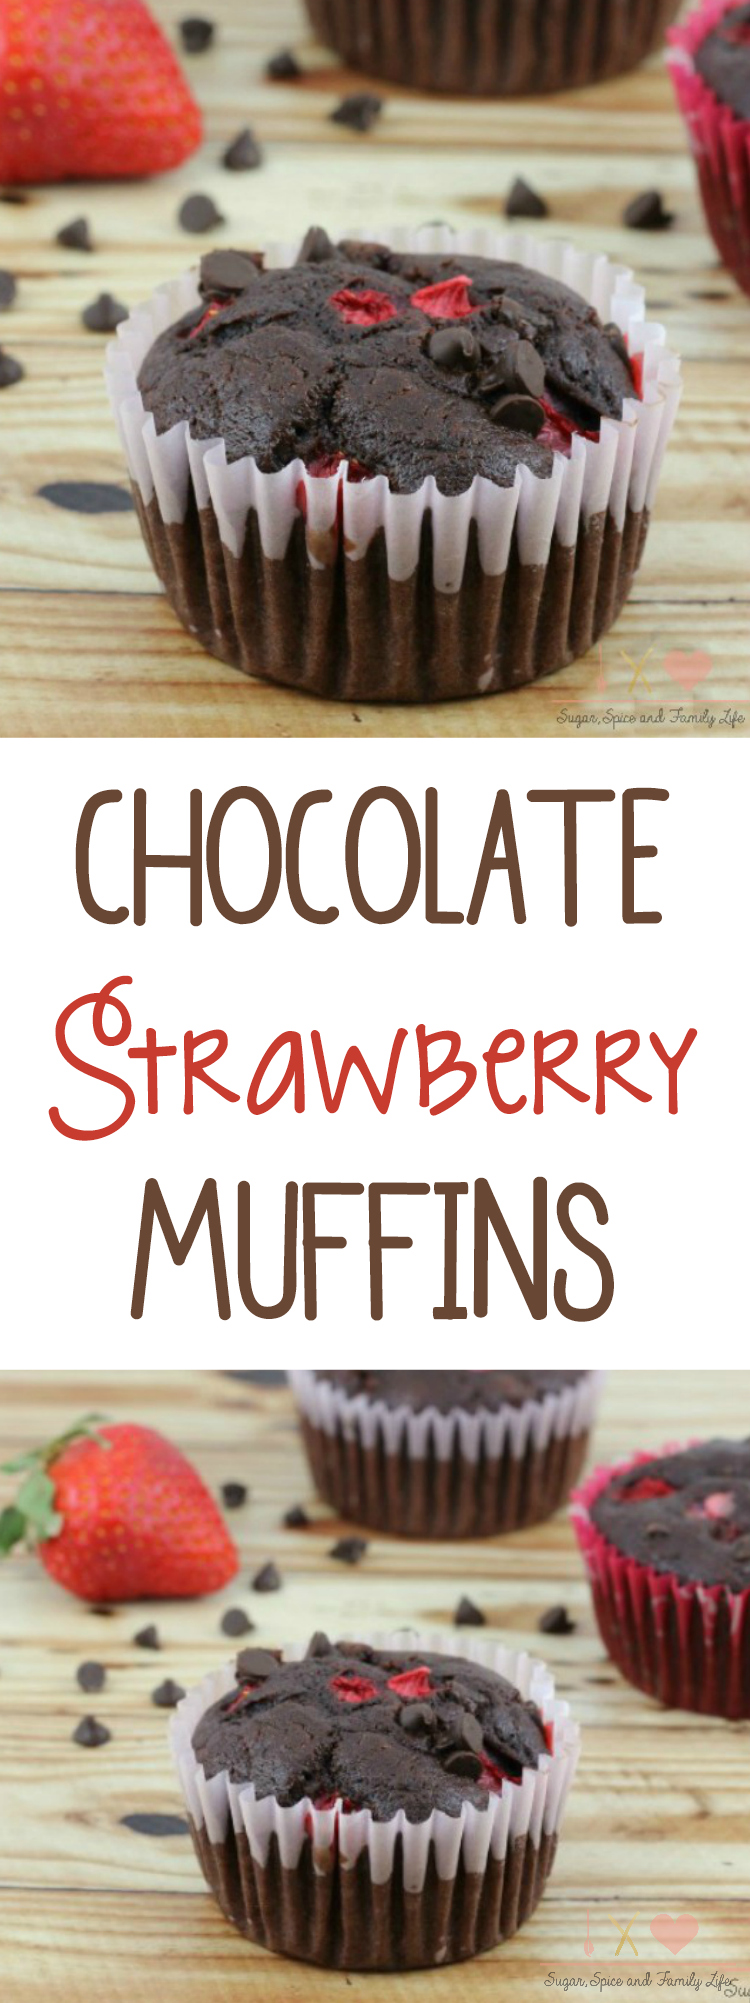 Chocolate Strawberry Muffins Recipe